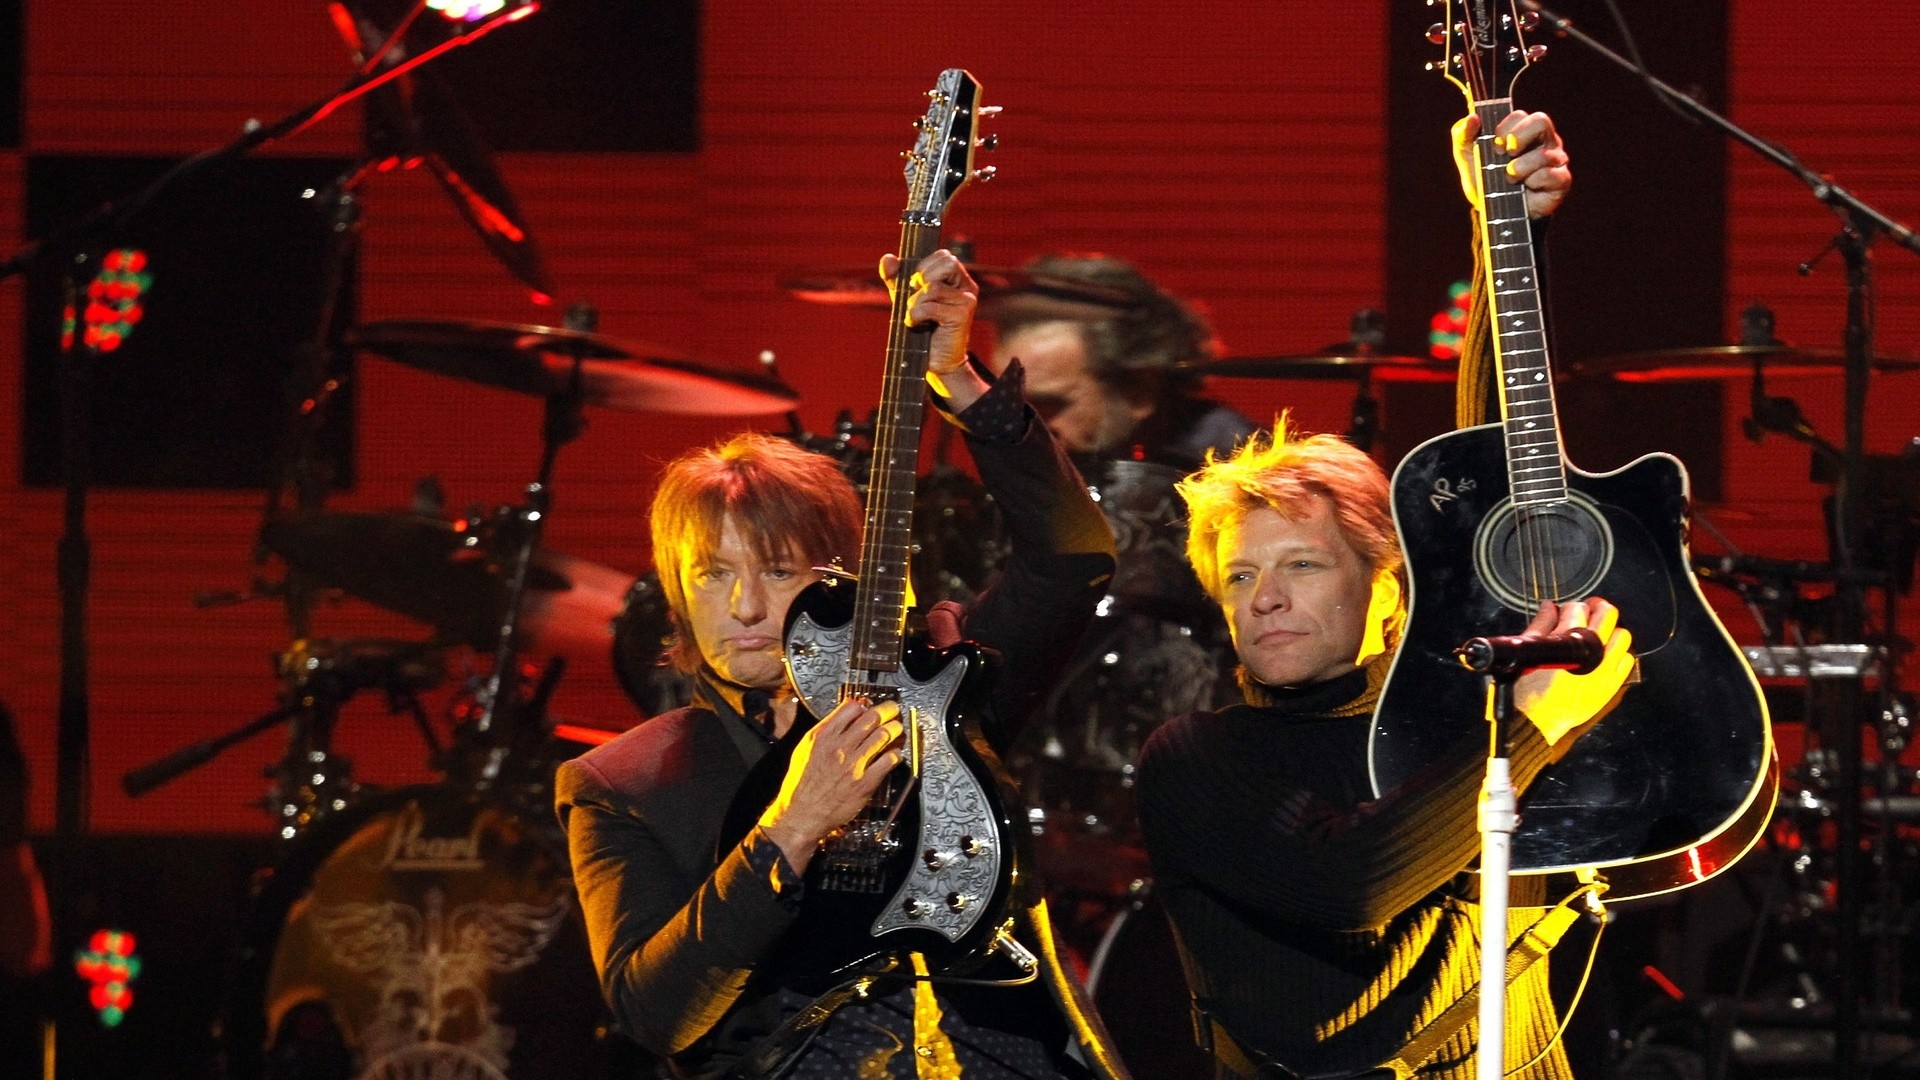 1920x1080 Jon Bon Jovi, Singer, Concert, Hard Rock, Heavy Metal, Guitar,